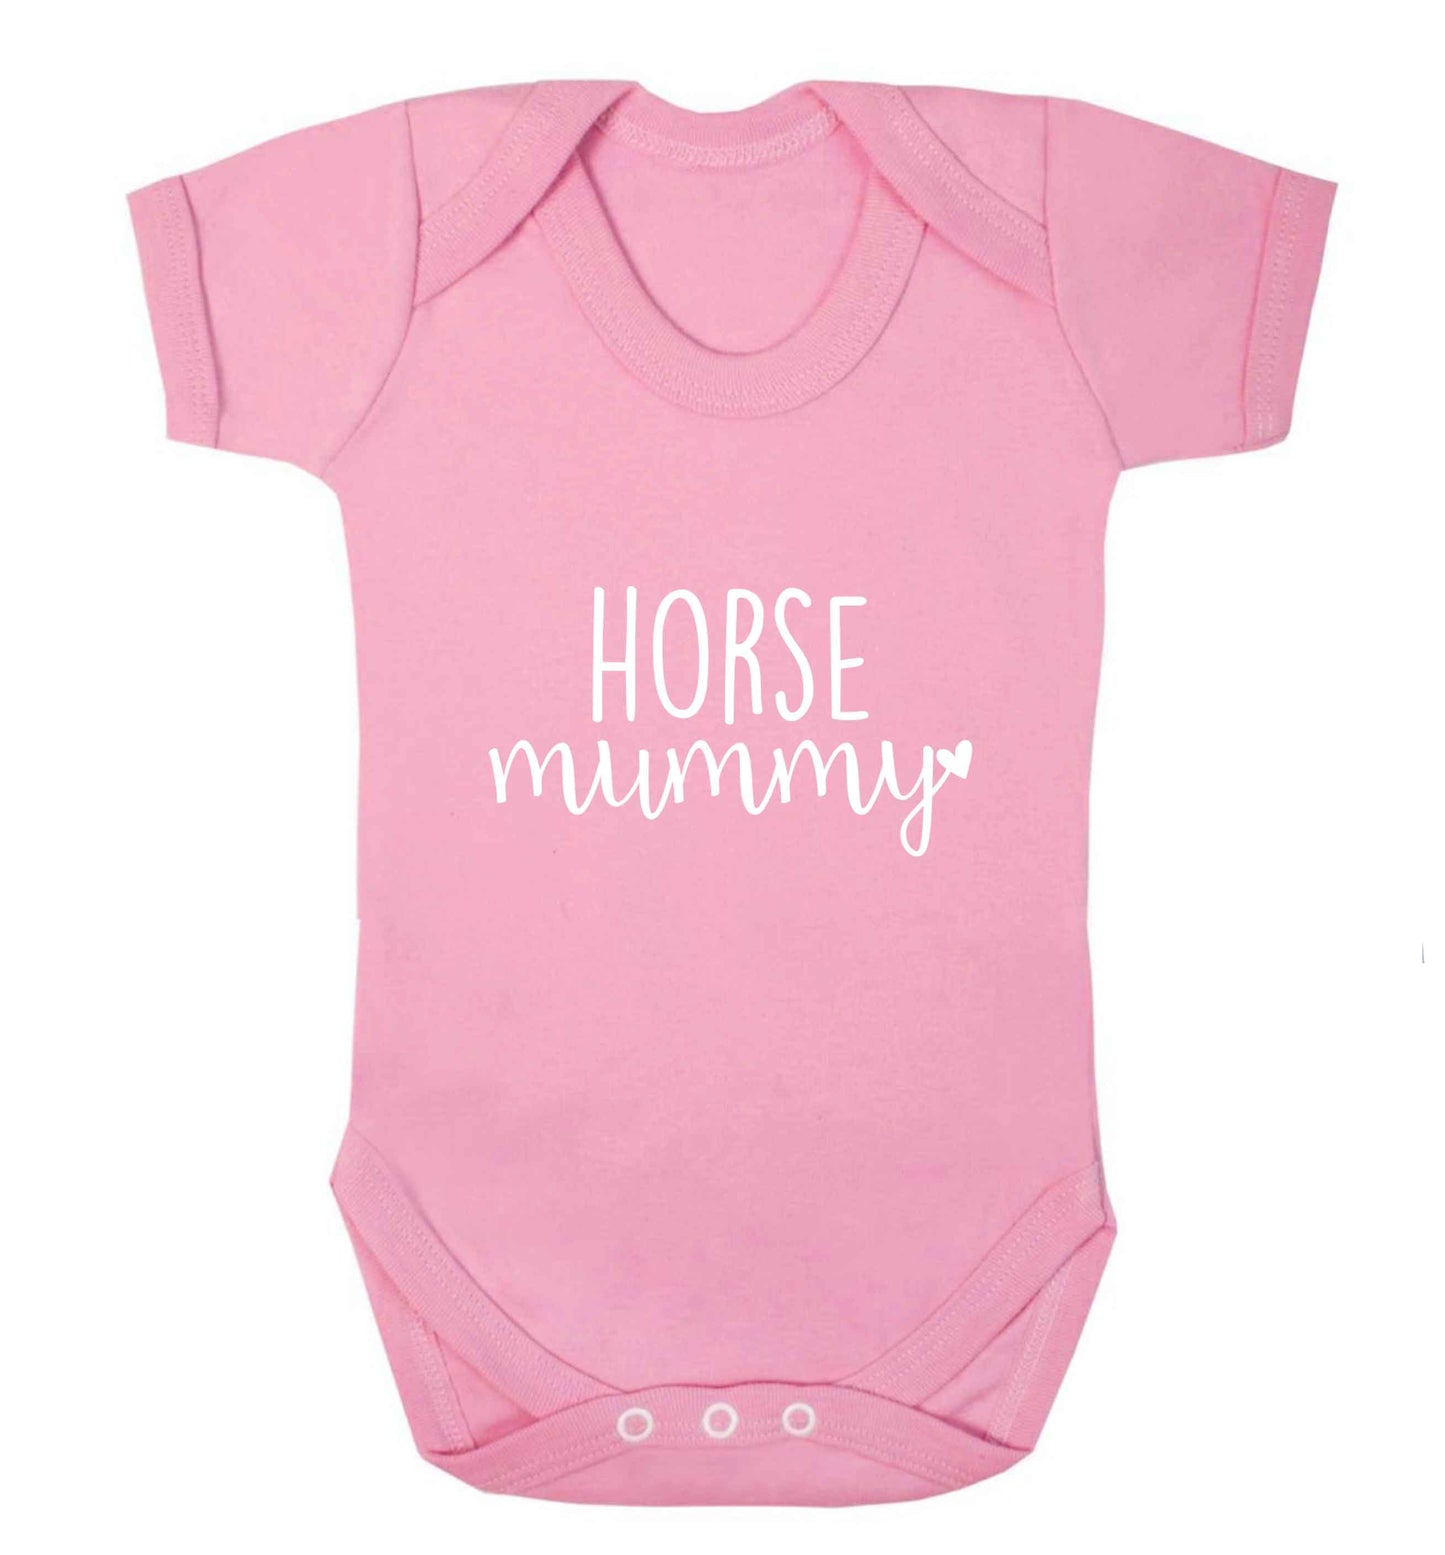 Horse mummy baby vest pale pink 18-24 months